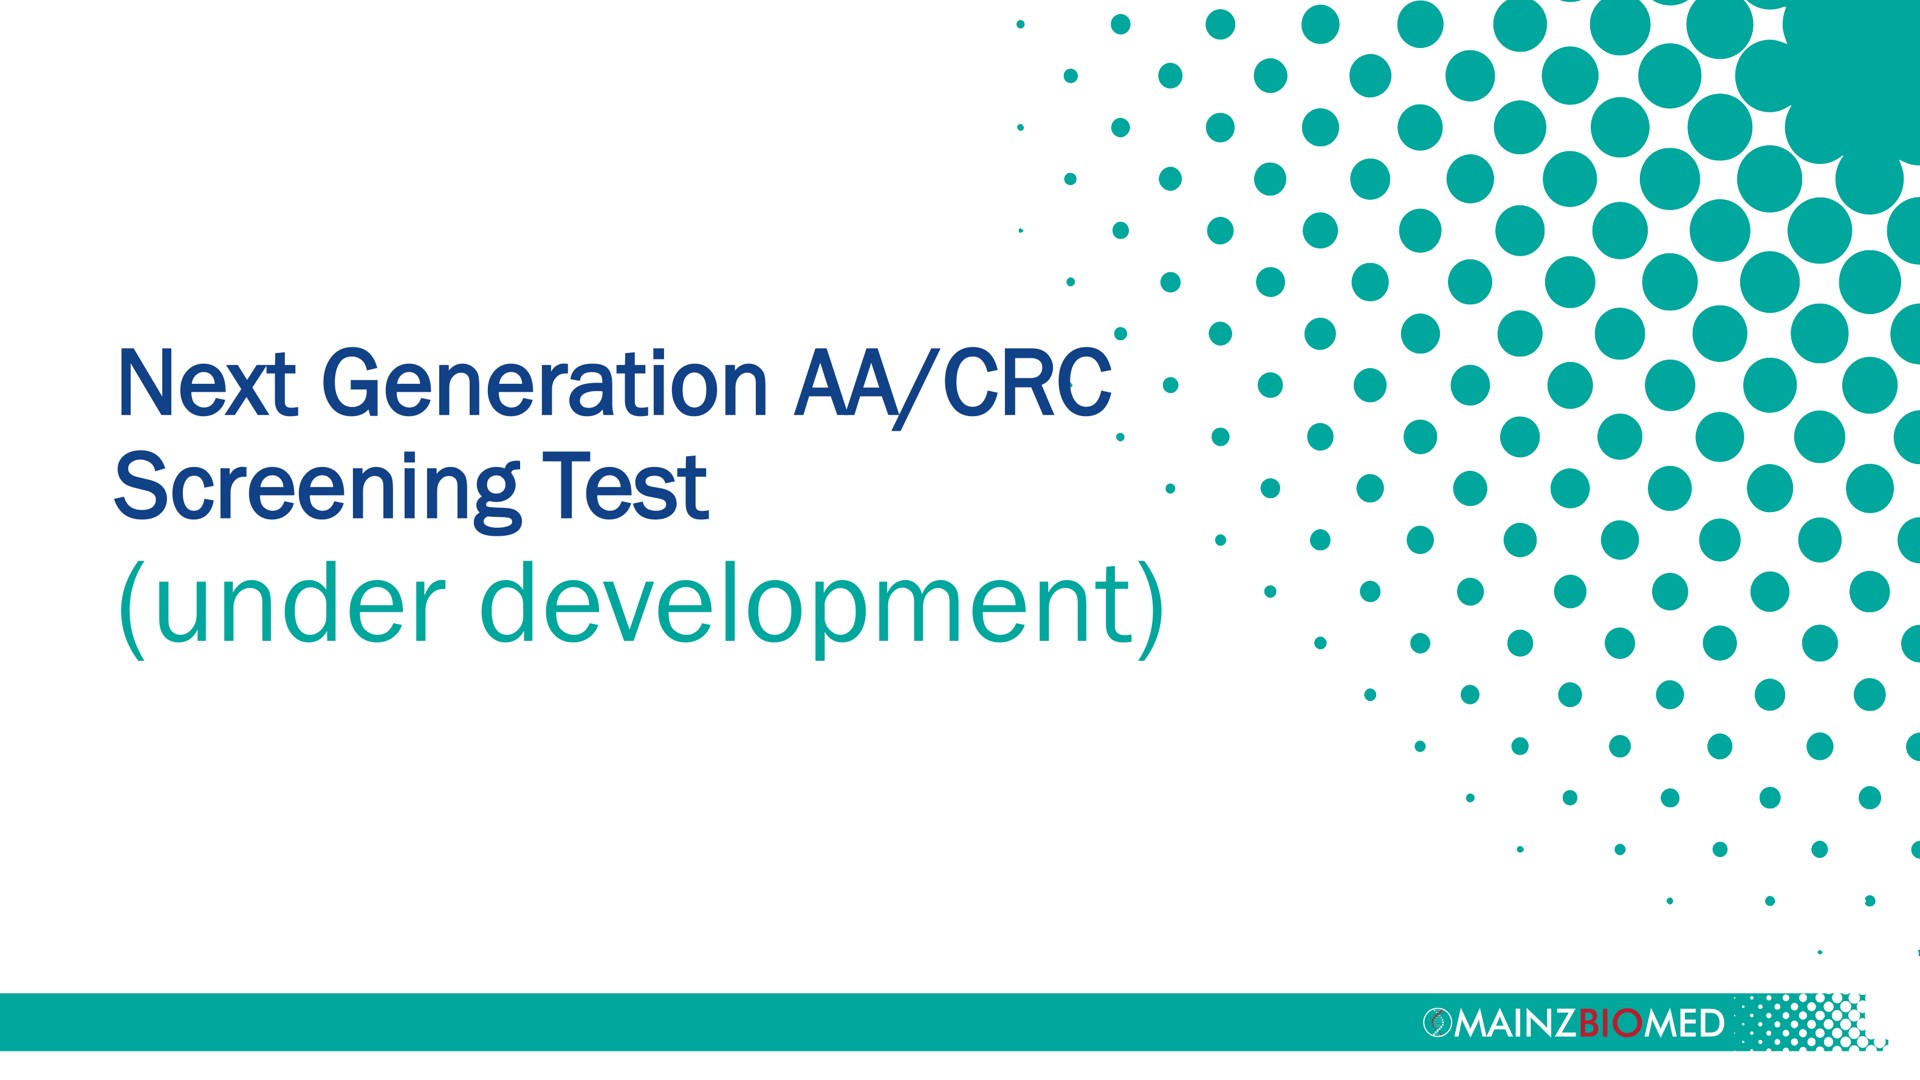 next generation screening test under development pete | Mainz Biomed NV